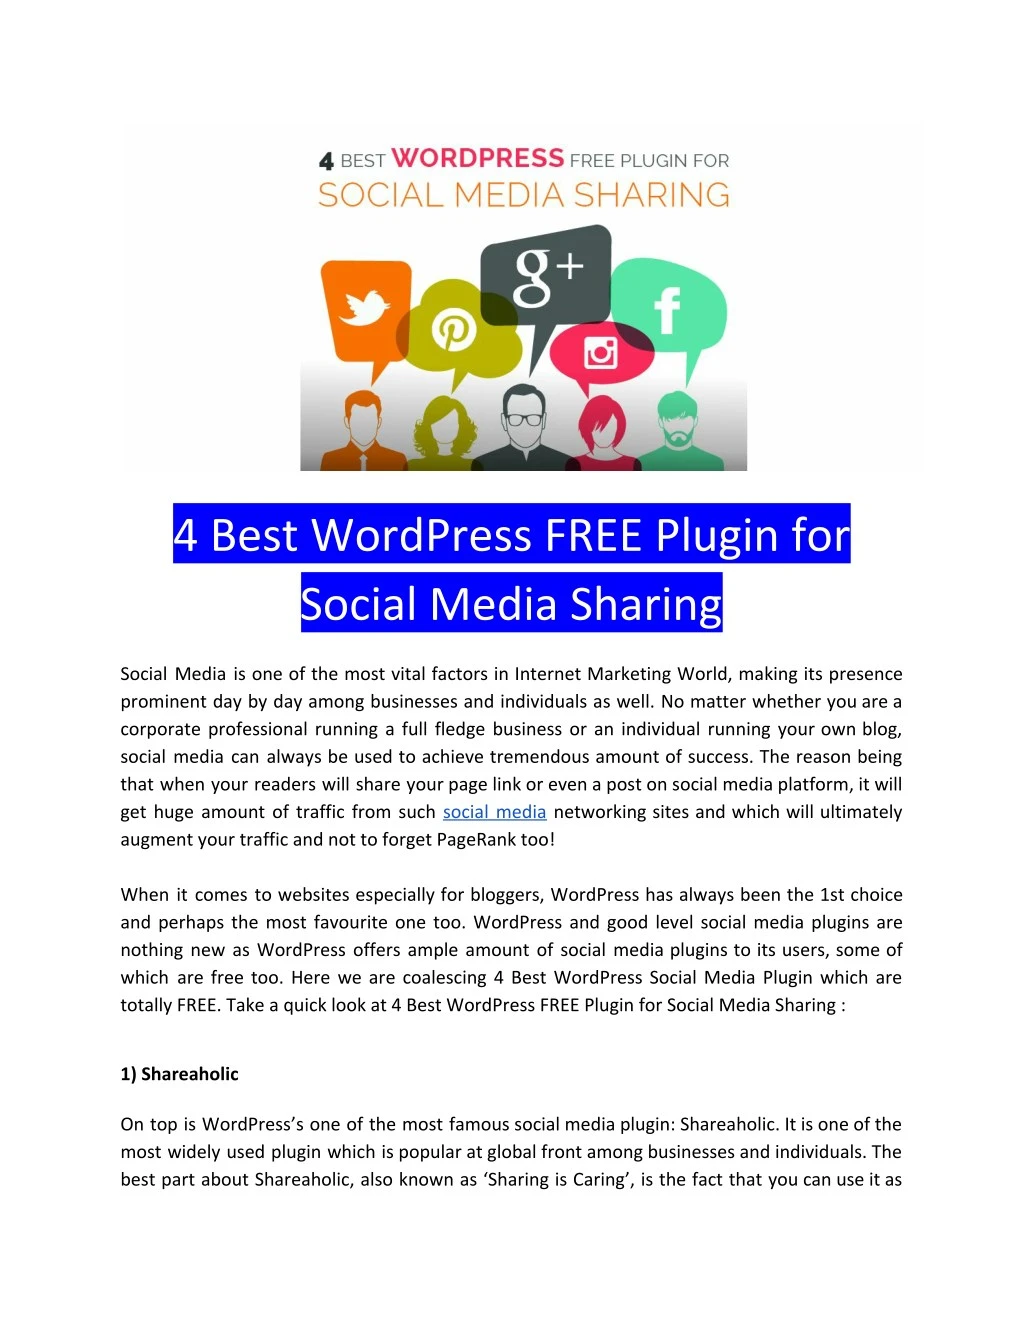 4 best wordpress free plugin for social media n.